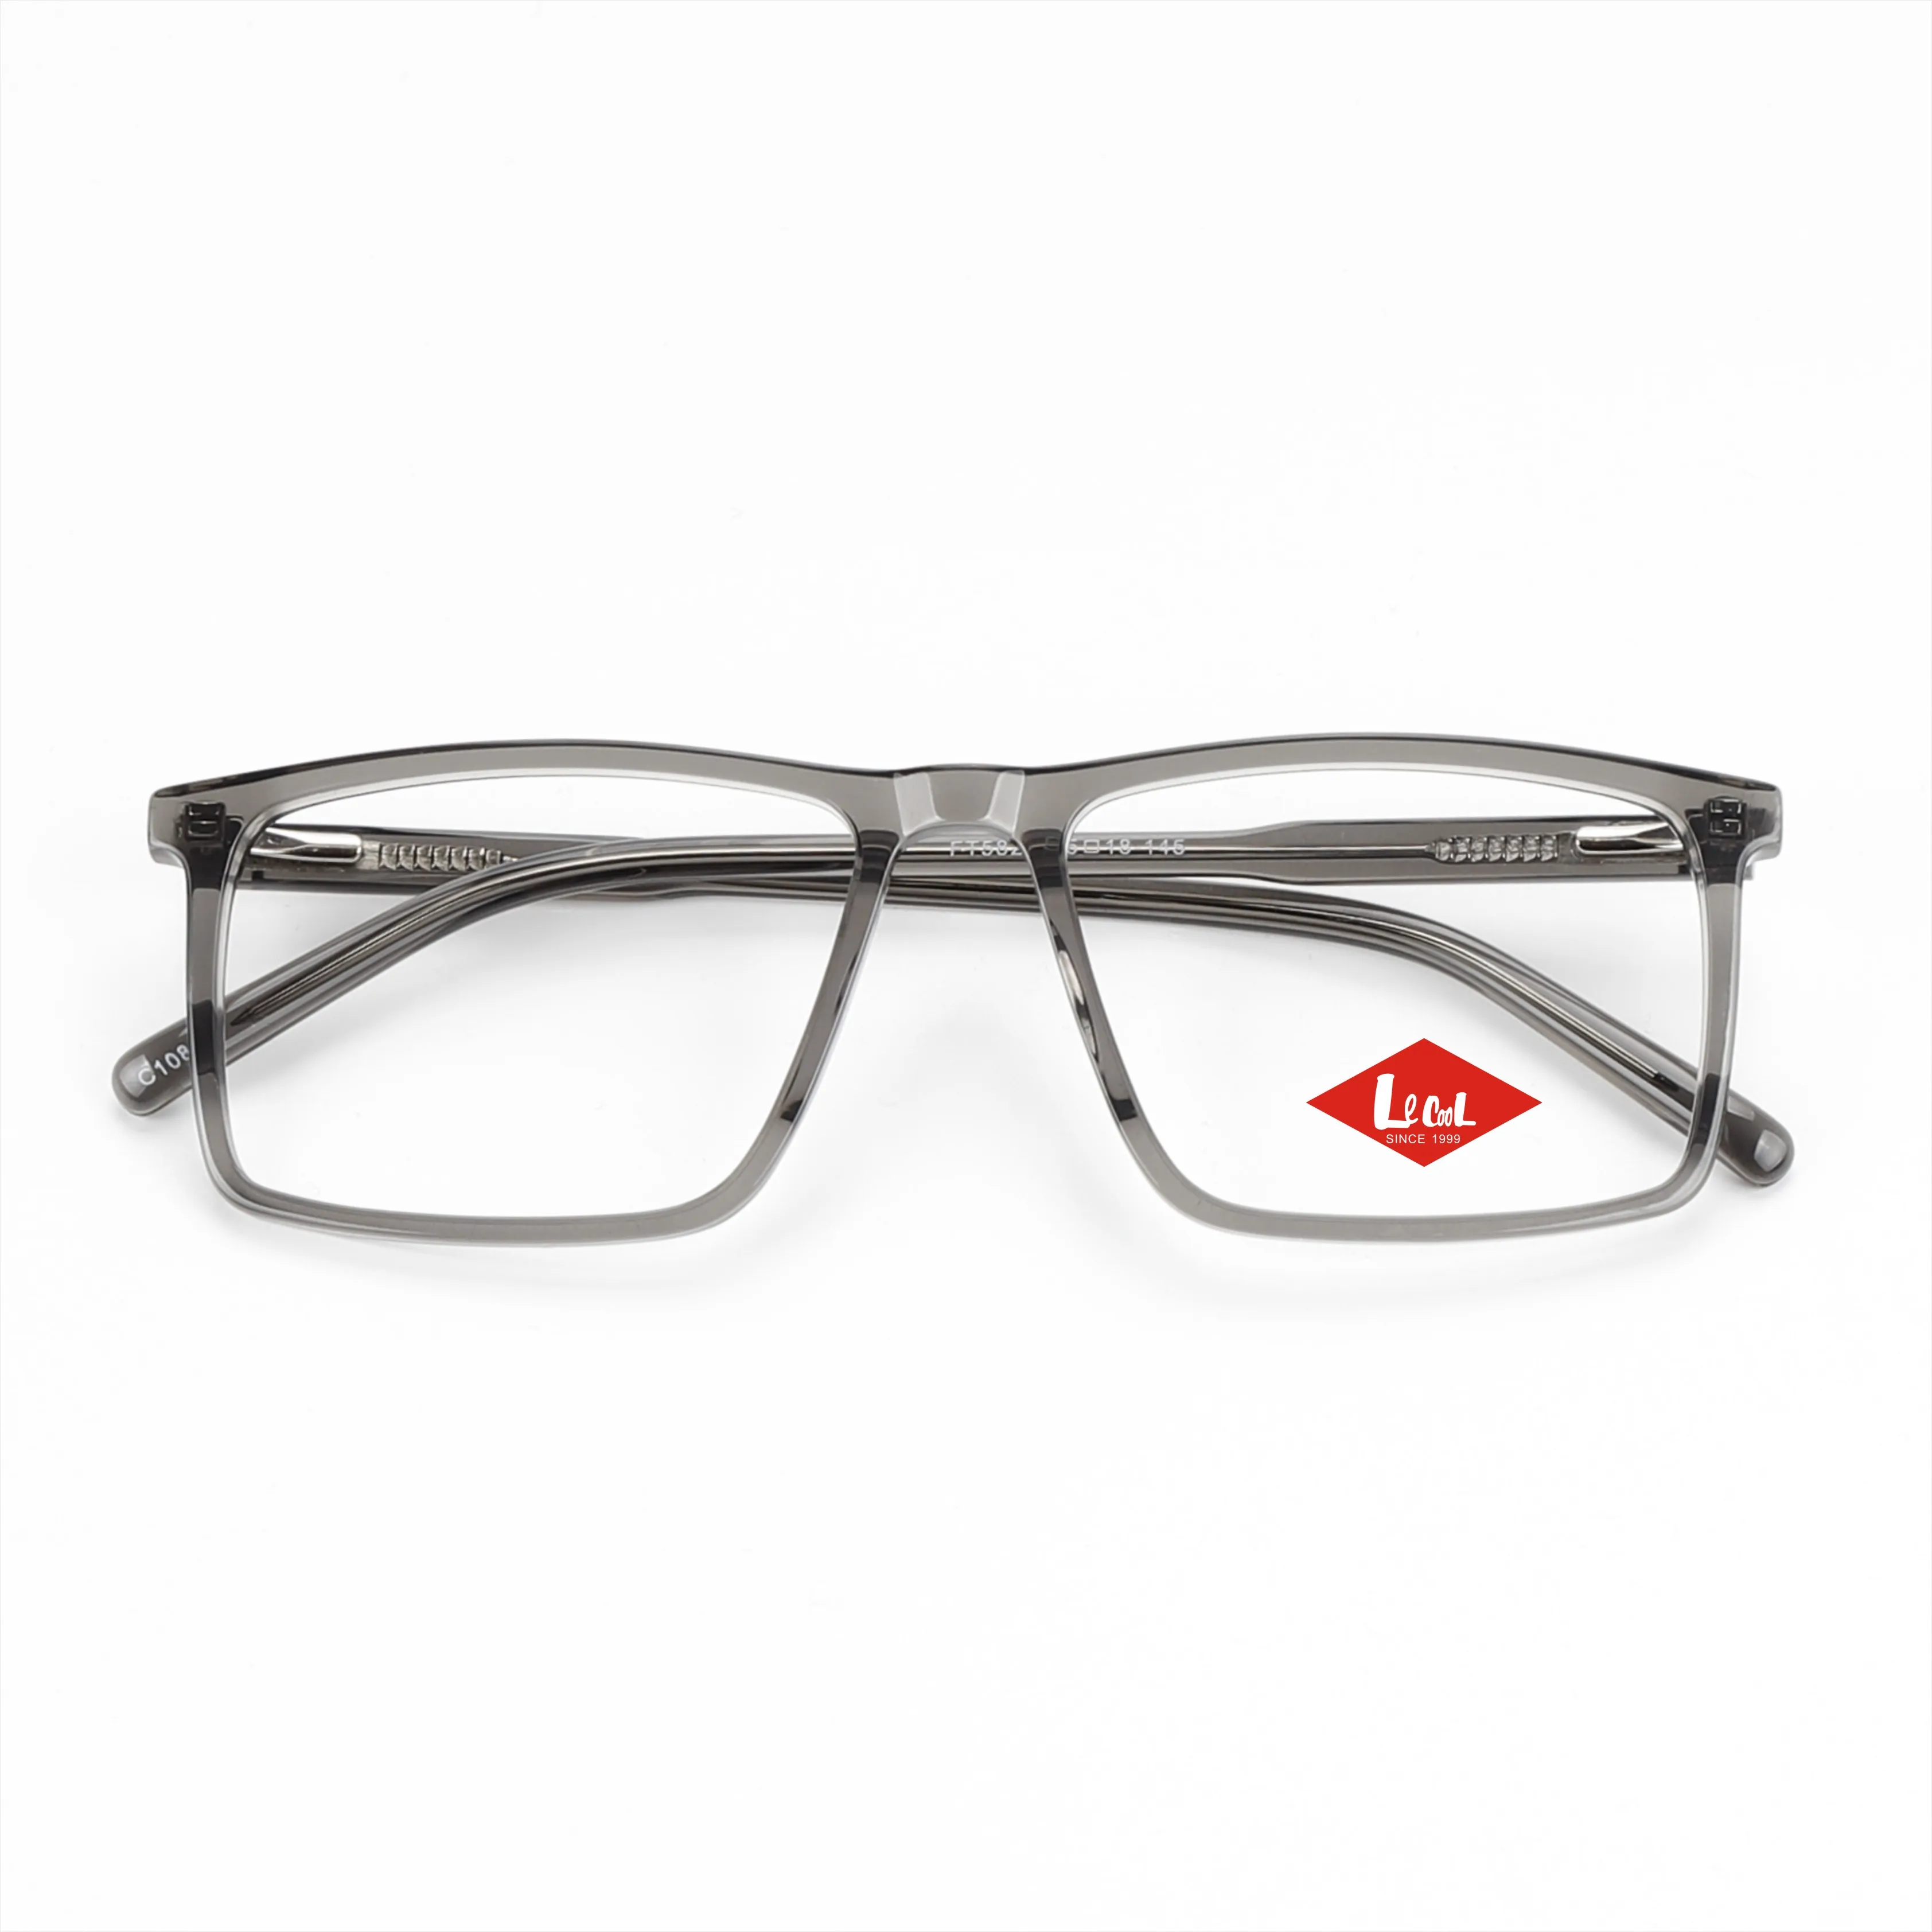 

Nerds Fancy Rectangle Online Eyeglasses Men Folding Handmade Spectacle Fit Over Danyang Anti Blue Ray Eyewear Transparent Frame